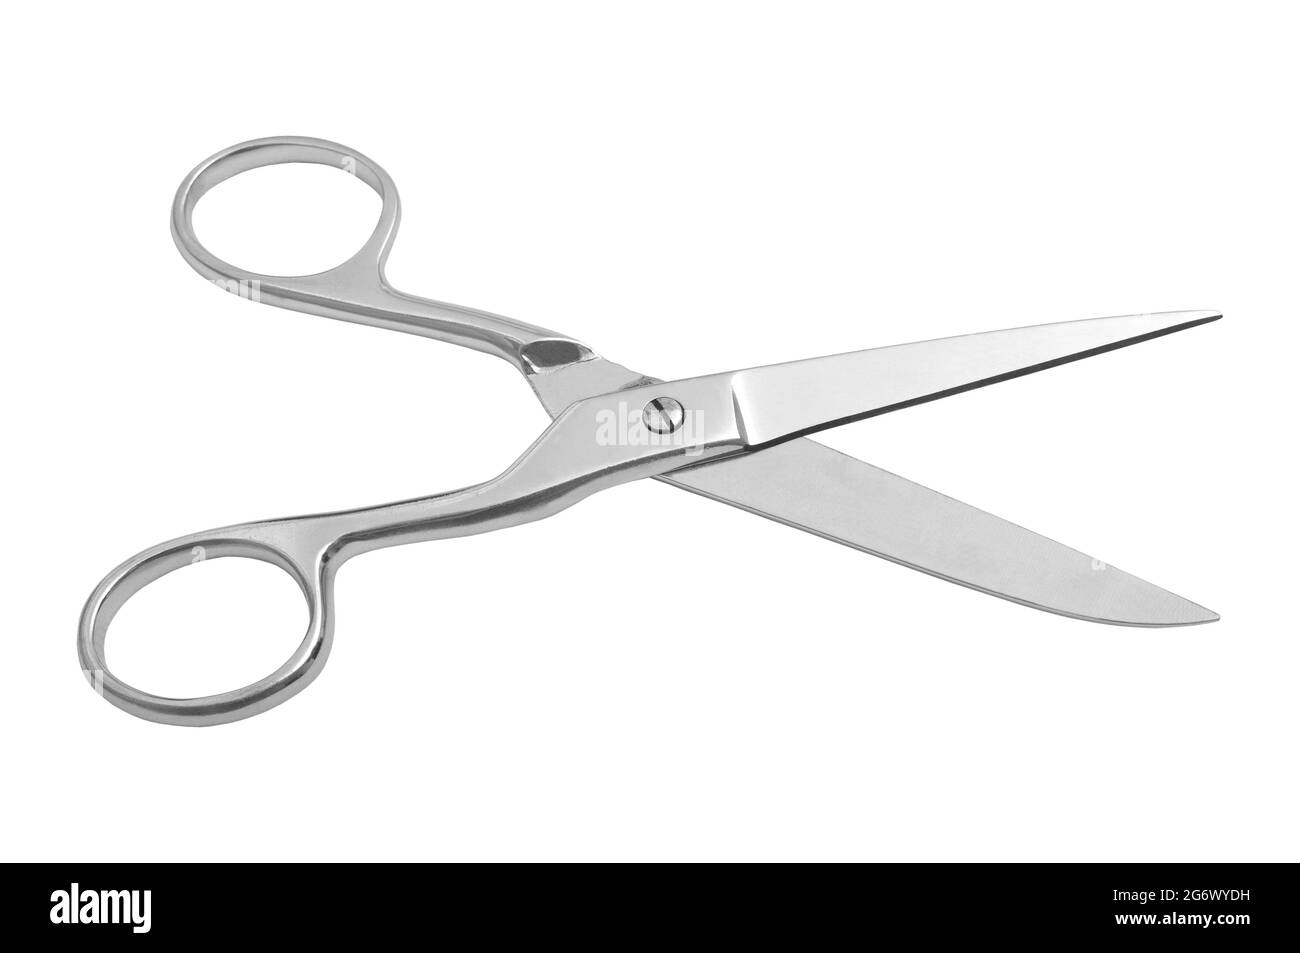 Very sharp retro professional tailor scissors, isolated on white background Stock Photo